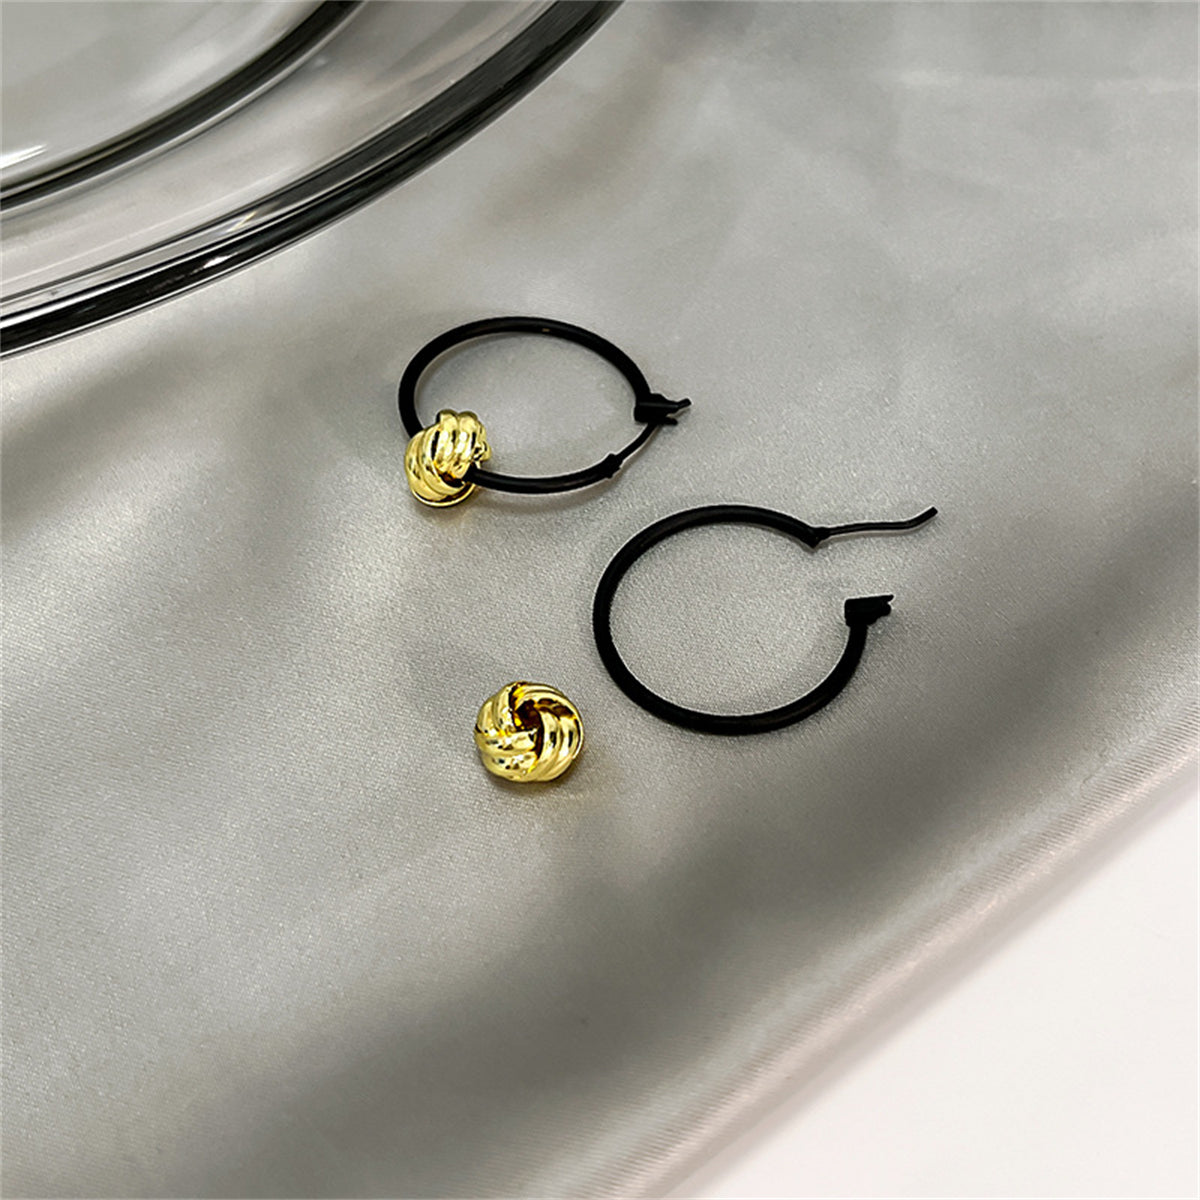 Black & 18K Gold-Plated Ball Hoop Earrings